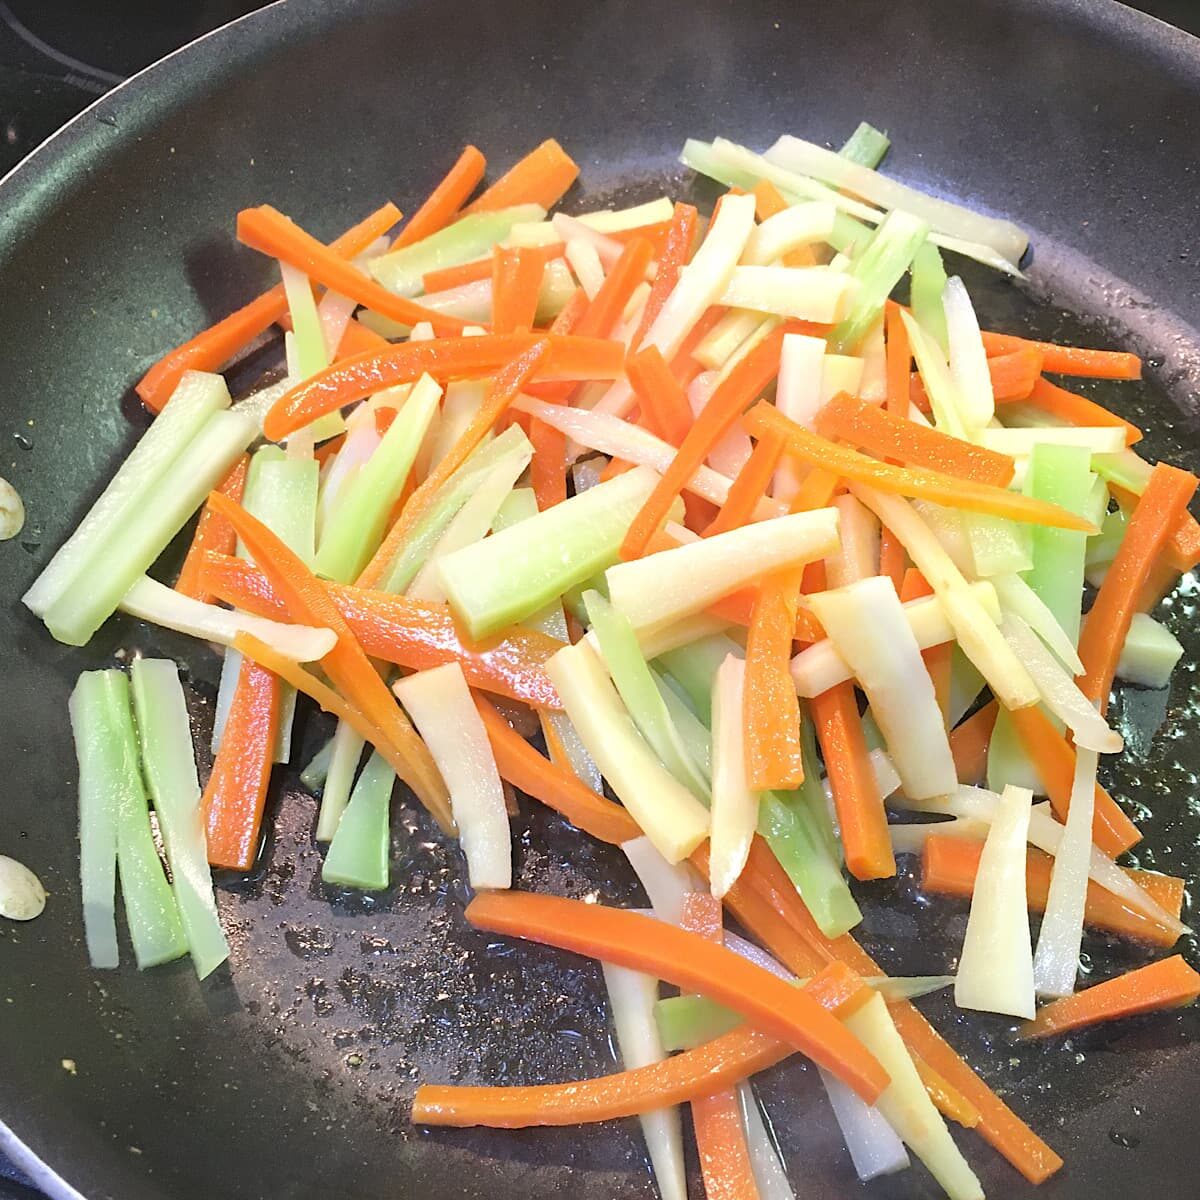 julienned veggies in frying pan.